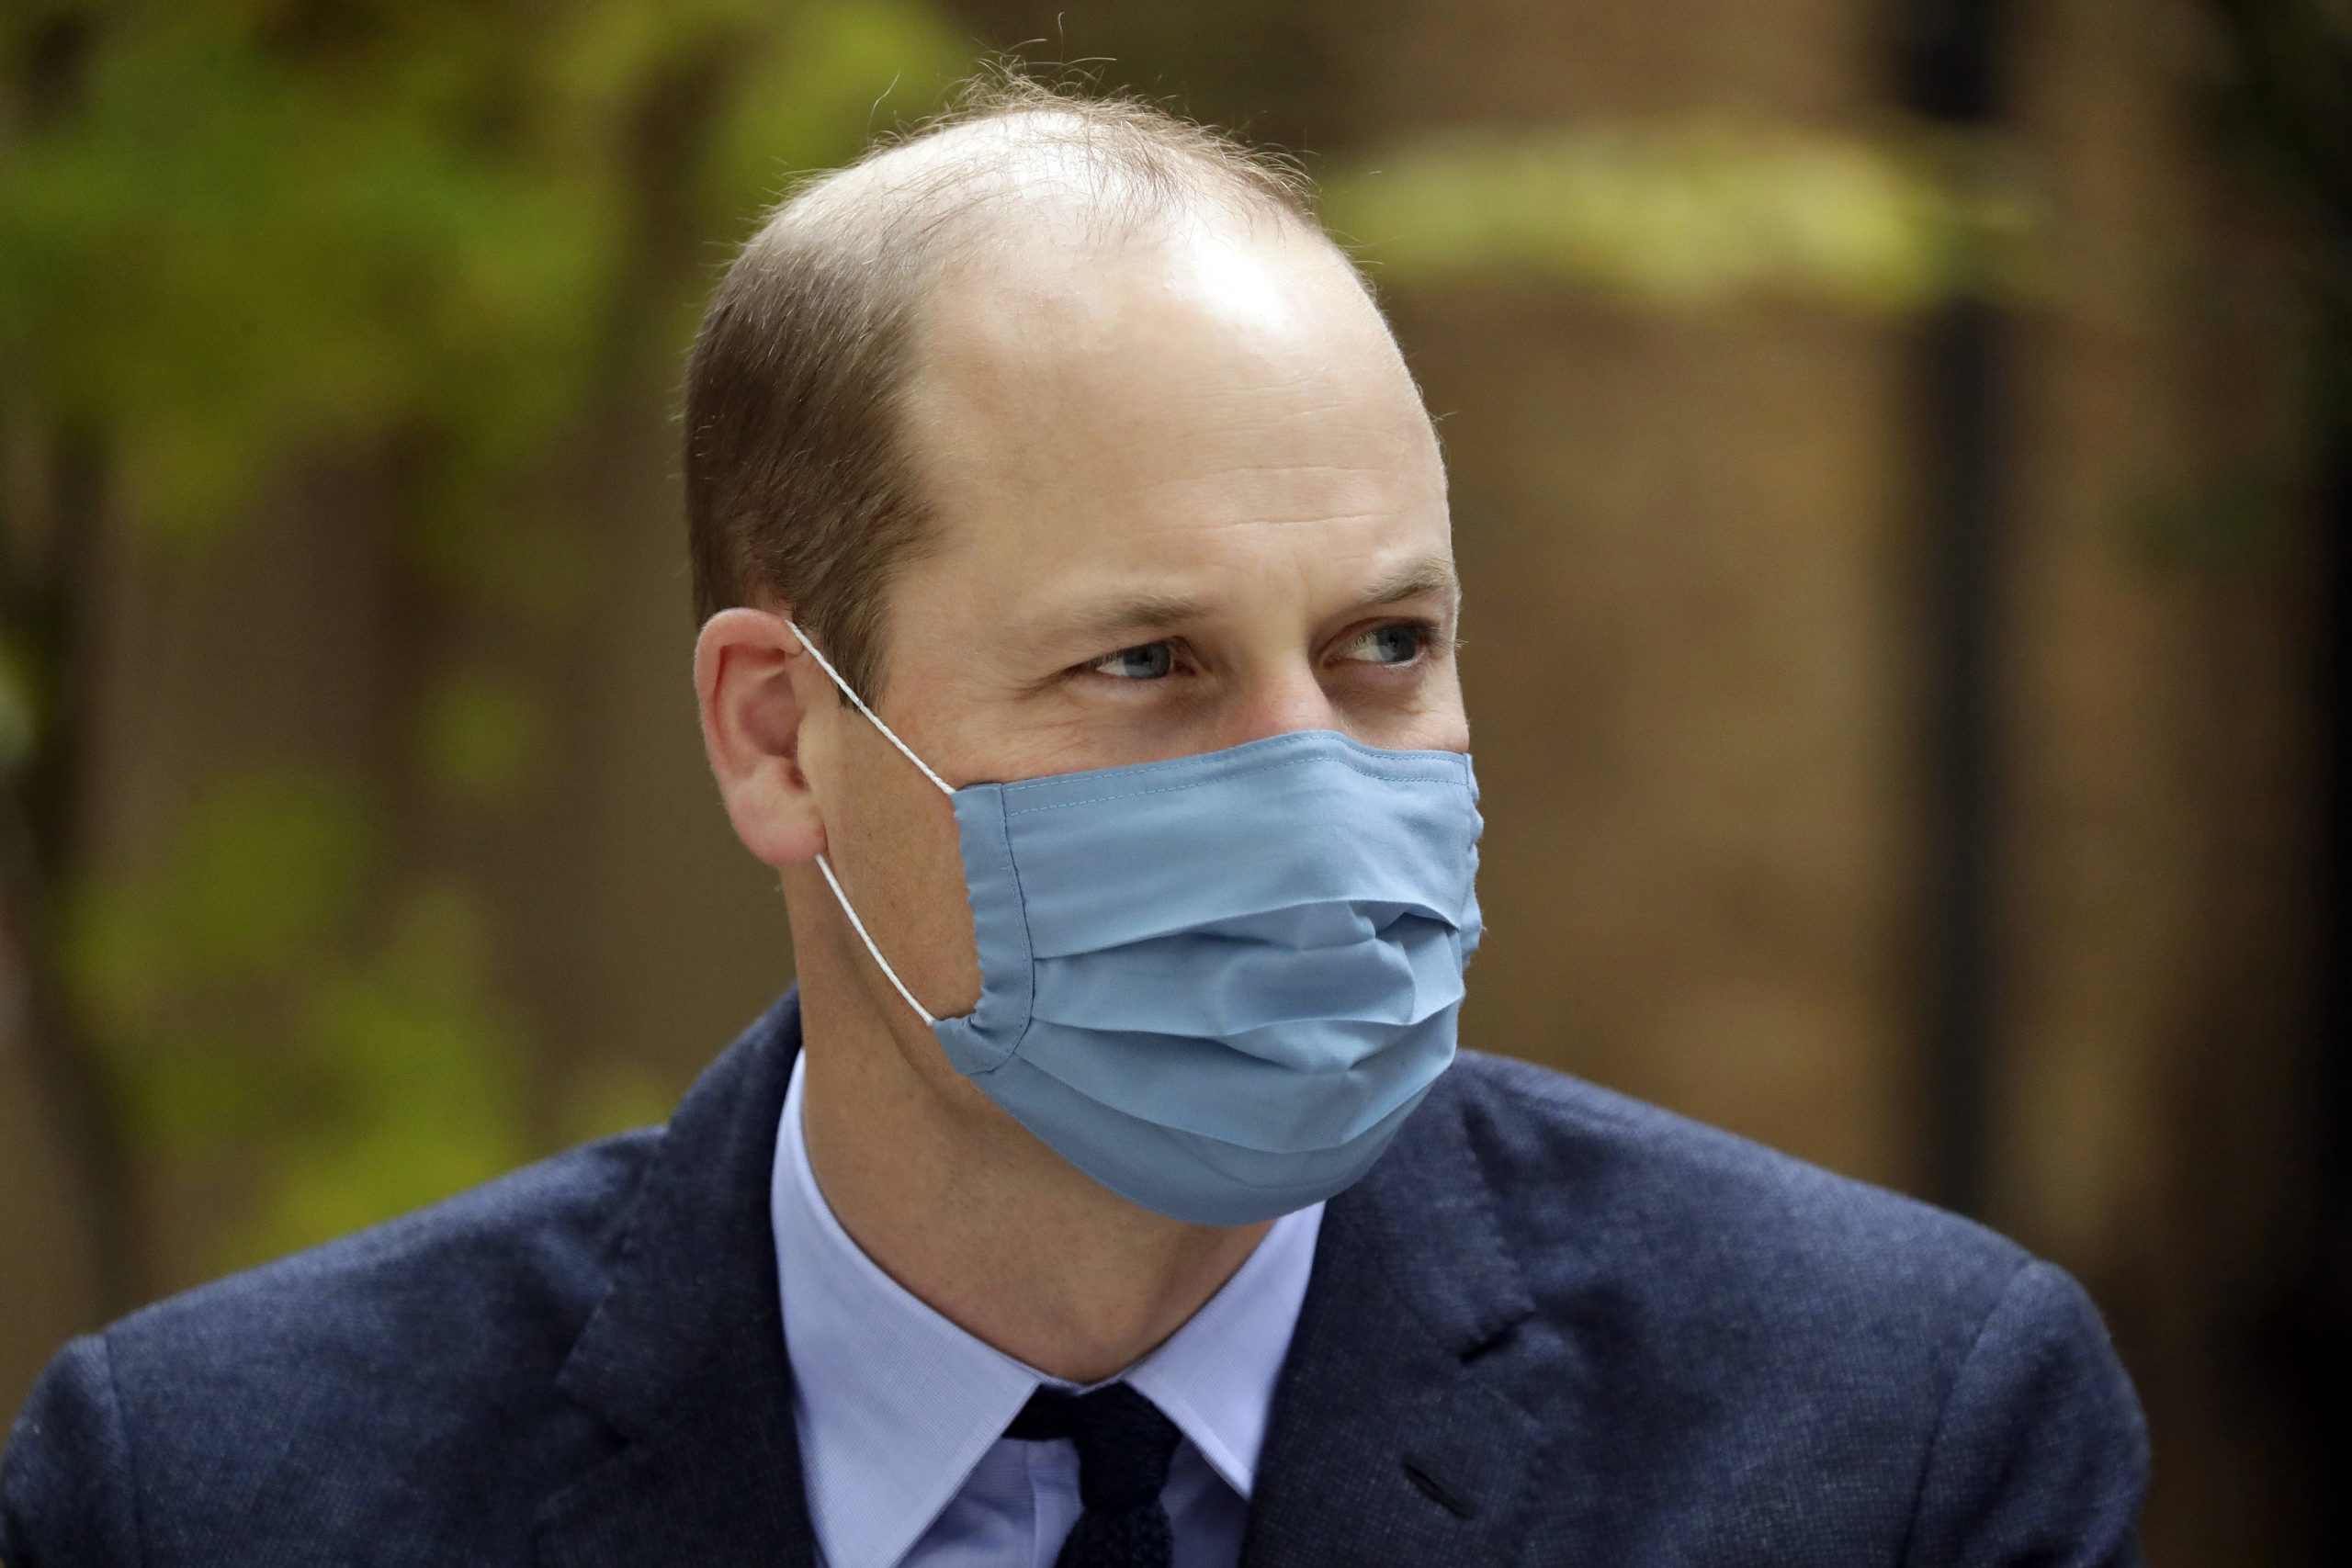 Prince William 'had a corona virus in April but kept it a secret'

